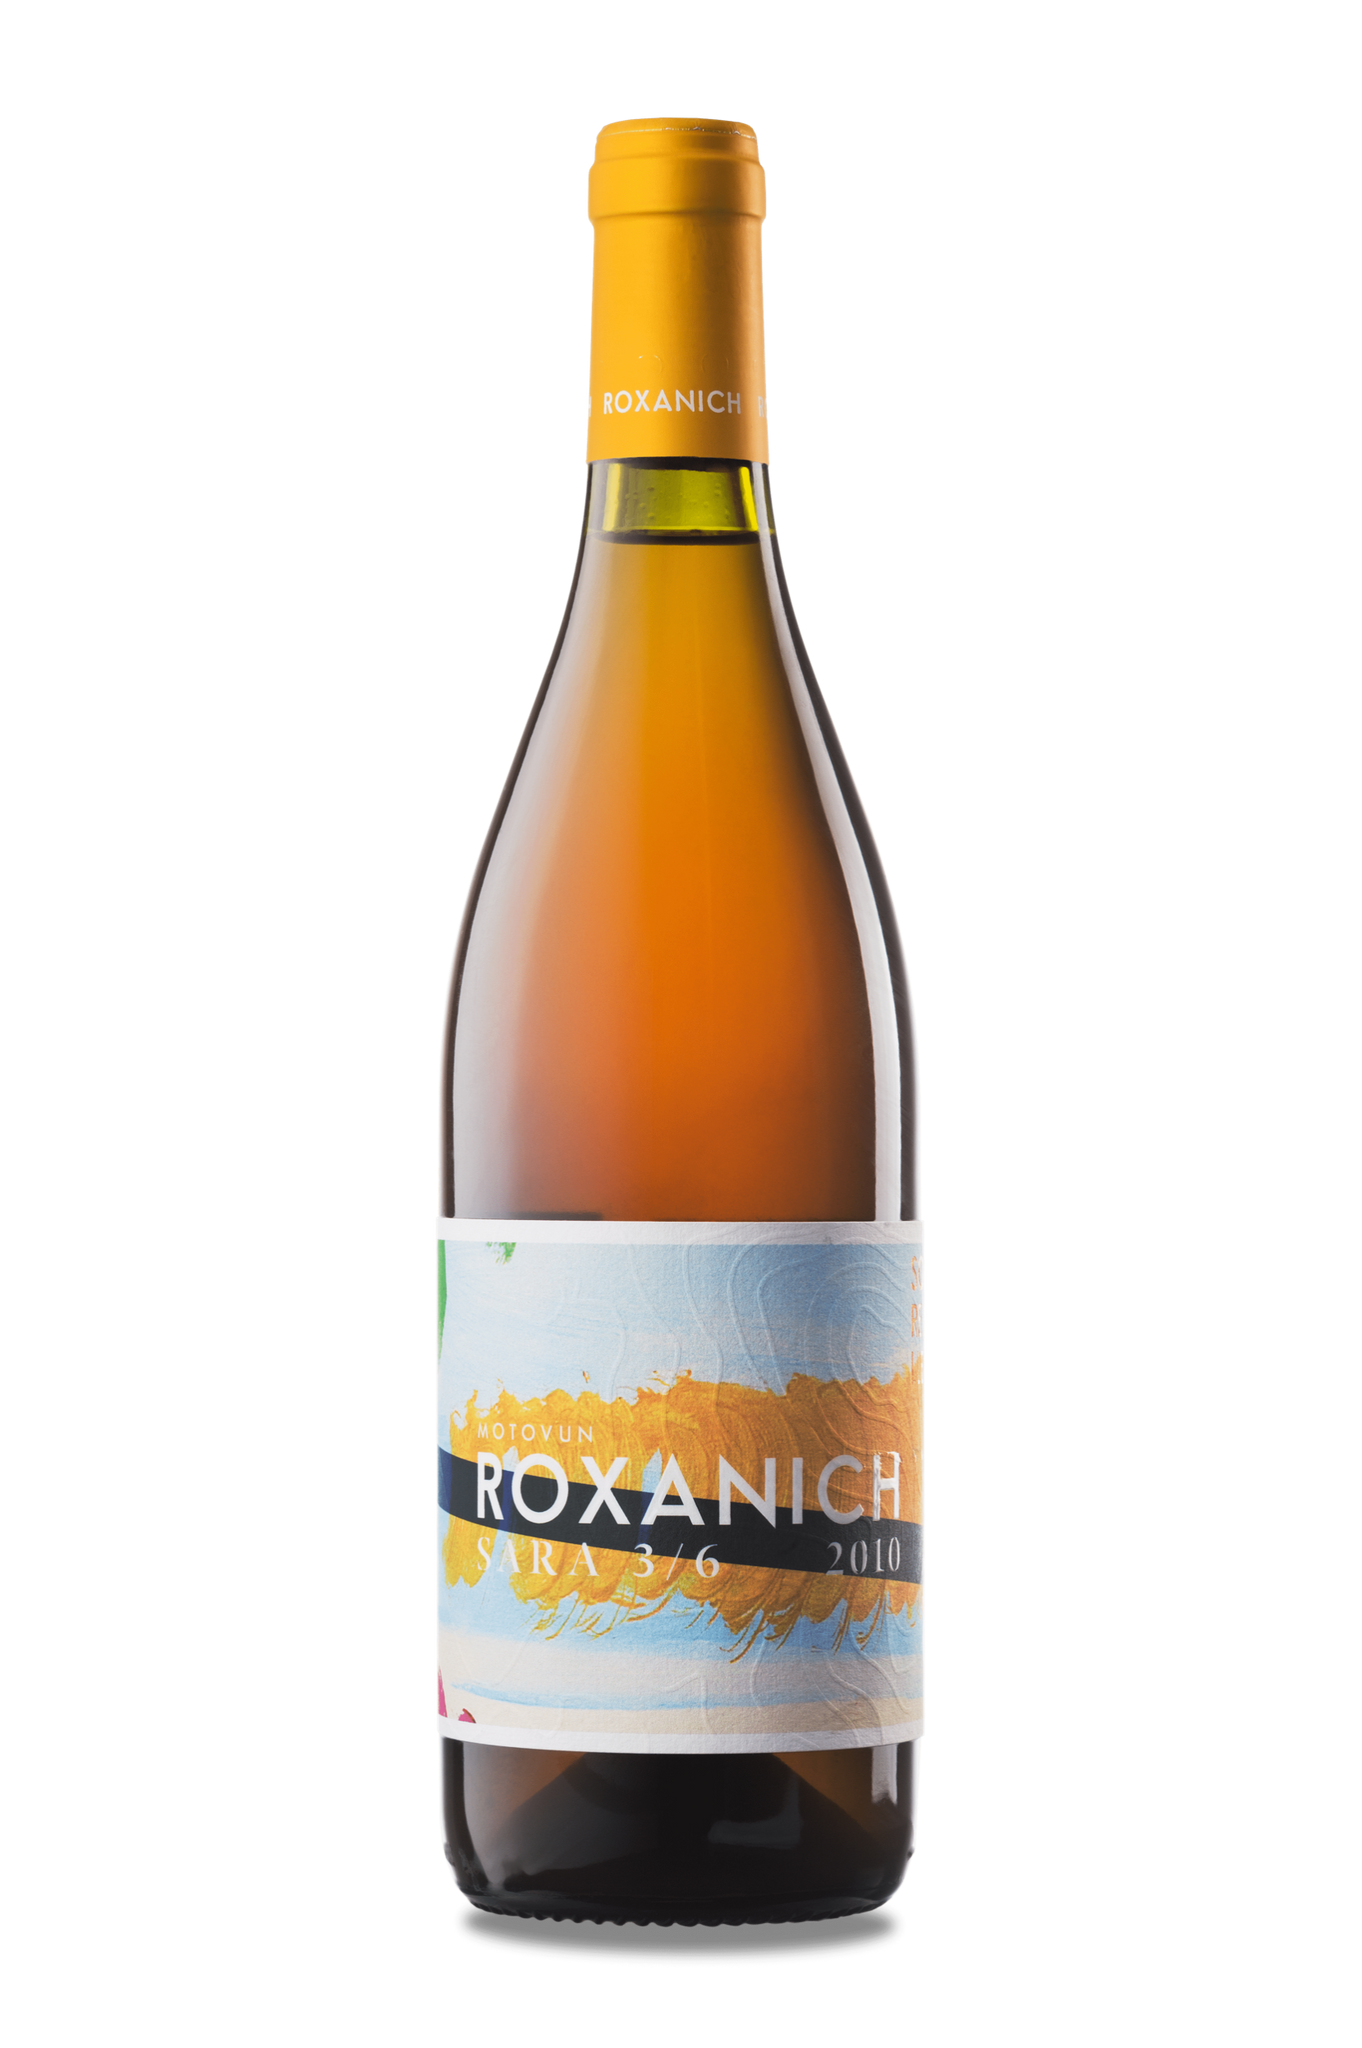 Roxanich Sara 3/6 Chardonnay Orange Wine